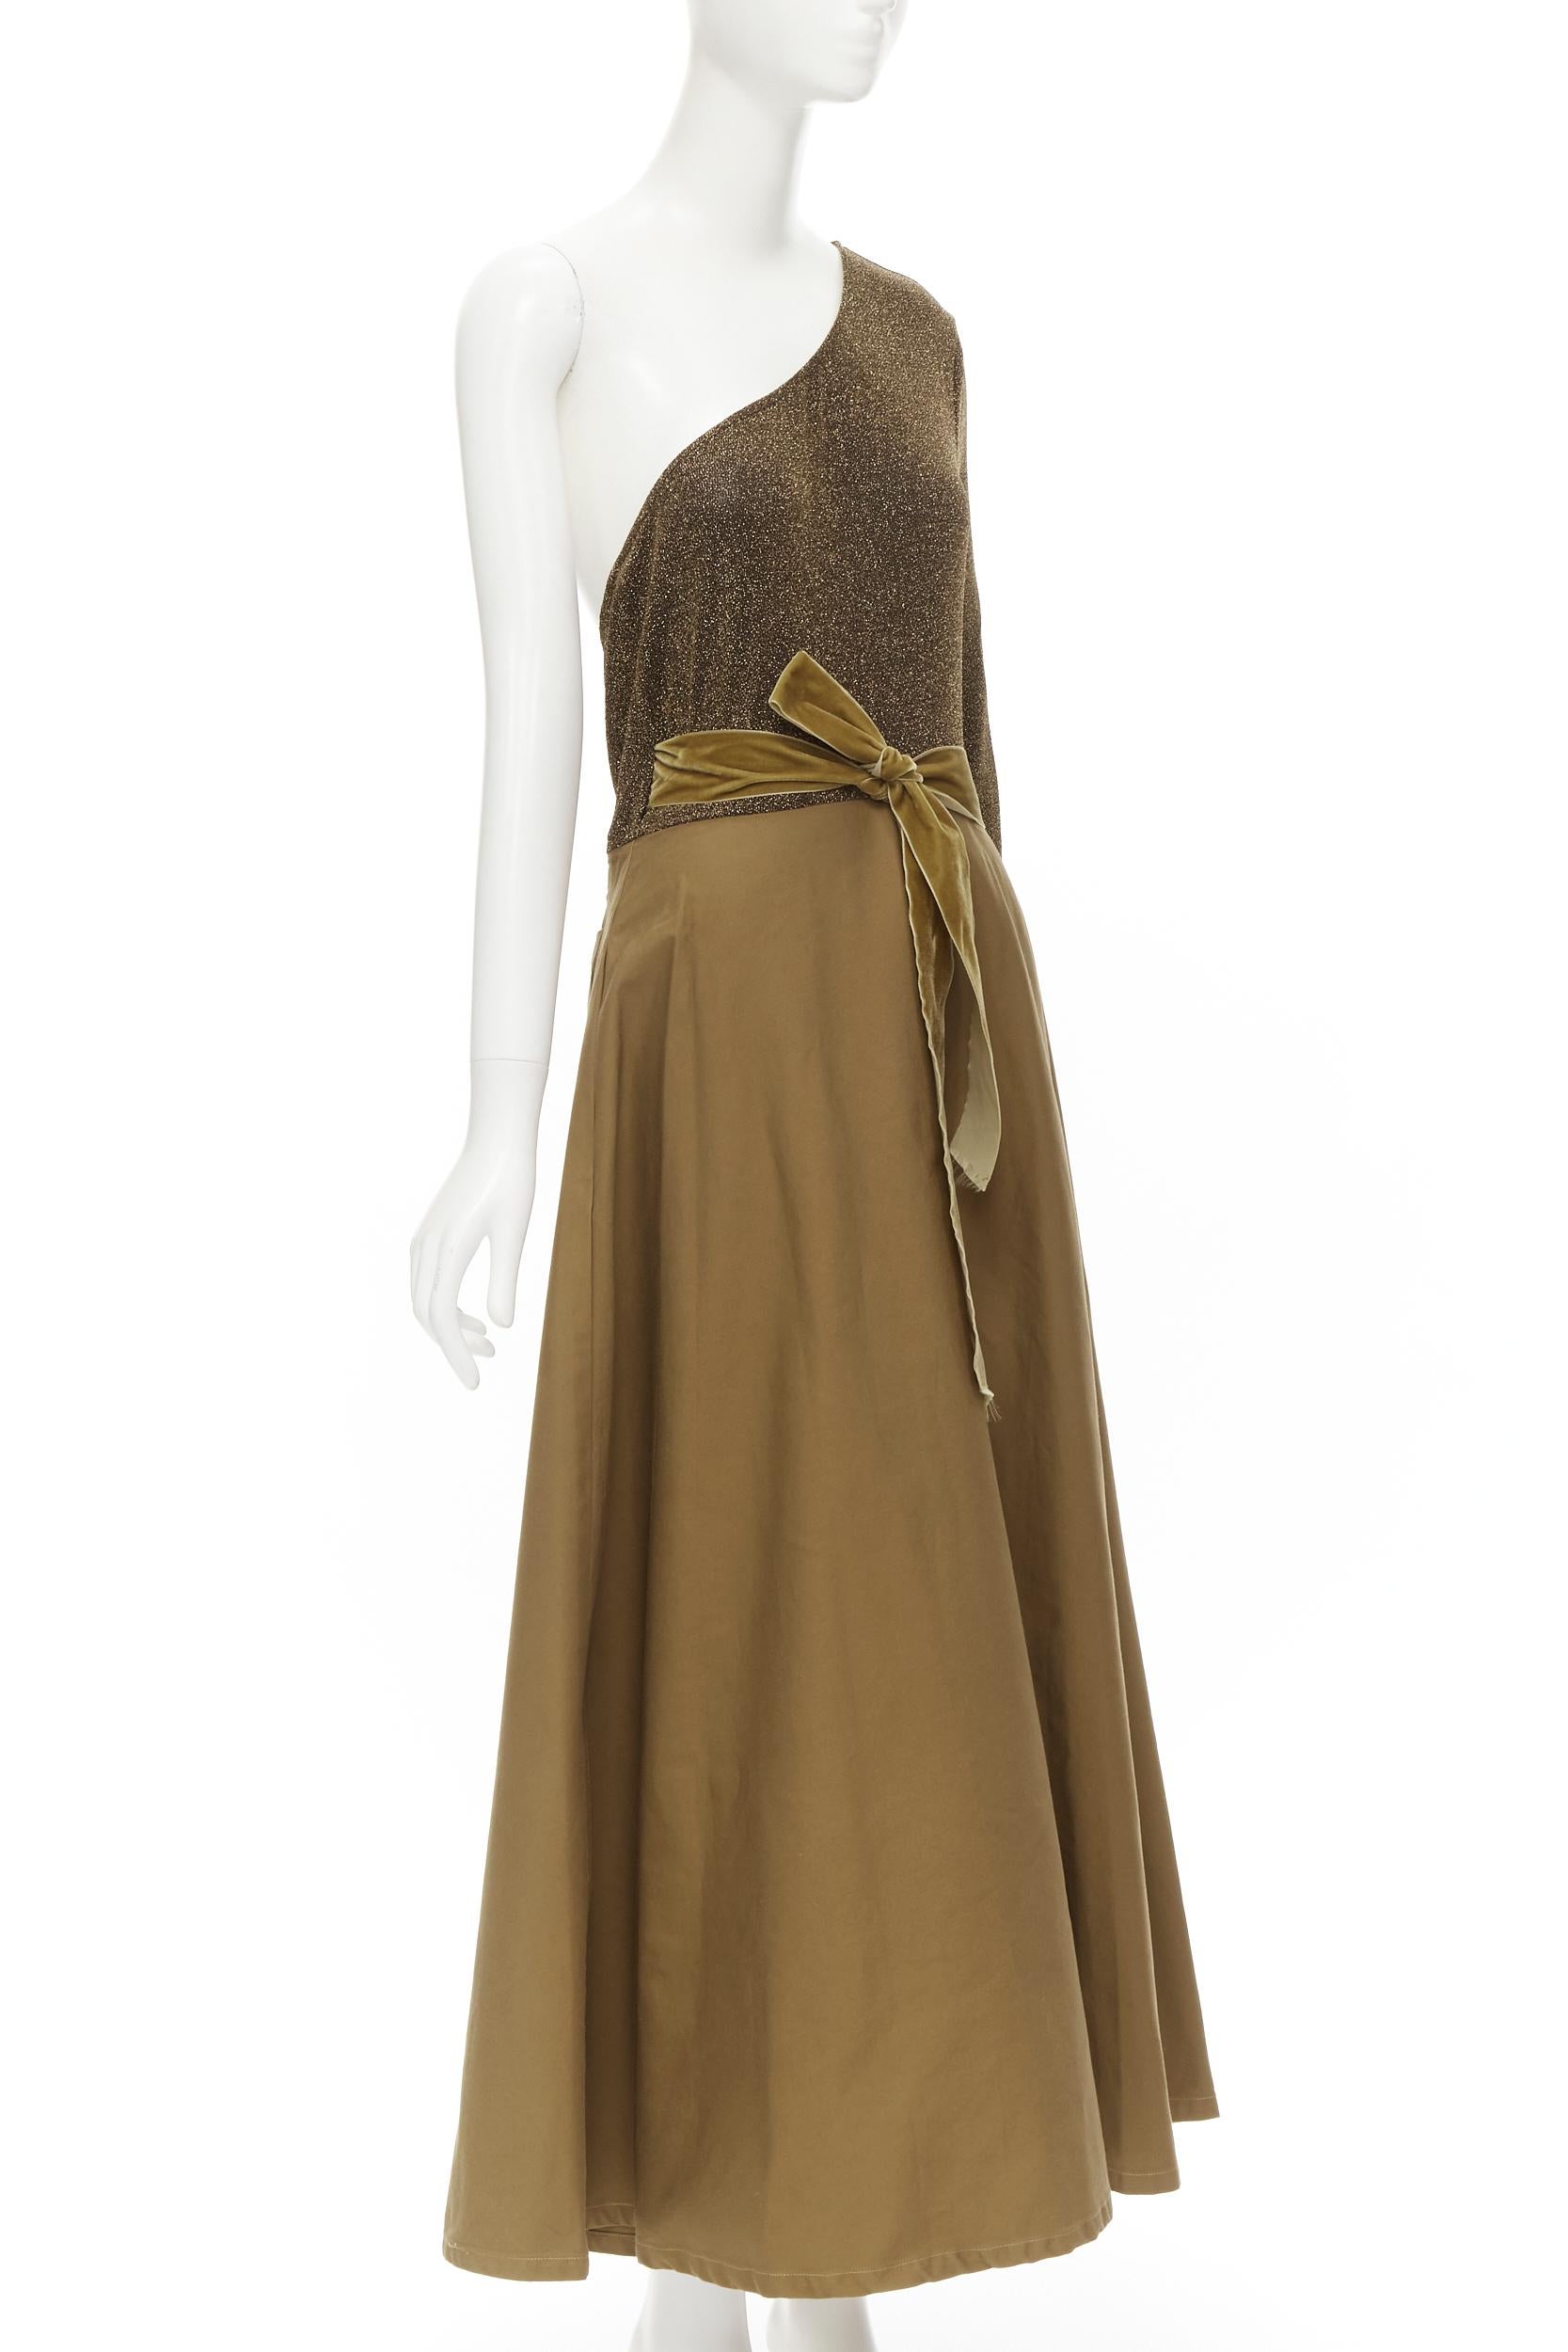 Brown ARTCLUB Casa Miller gold lurex brown cotton twill wrap maxi dress M For Sale